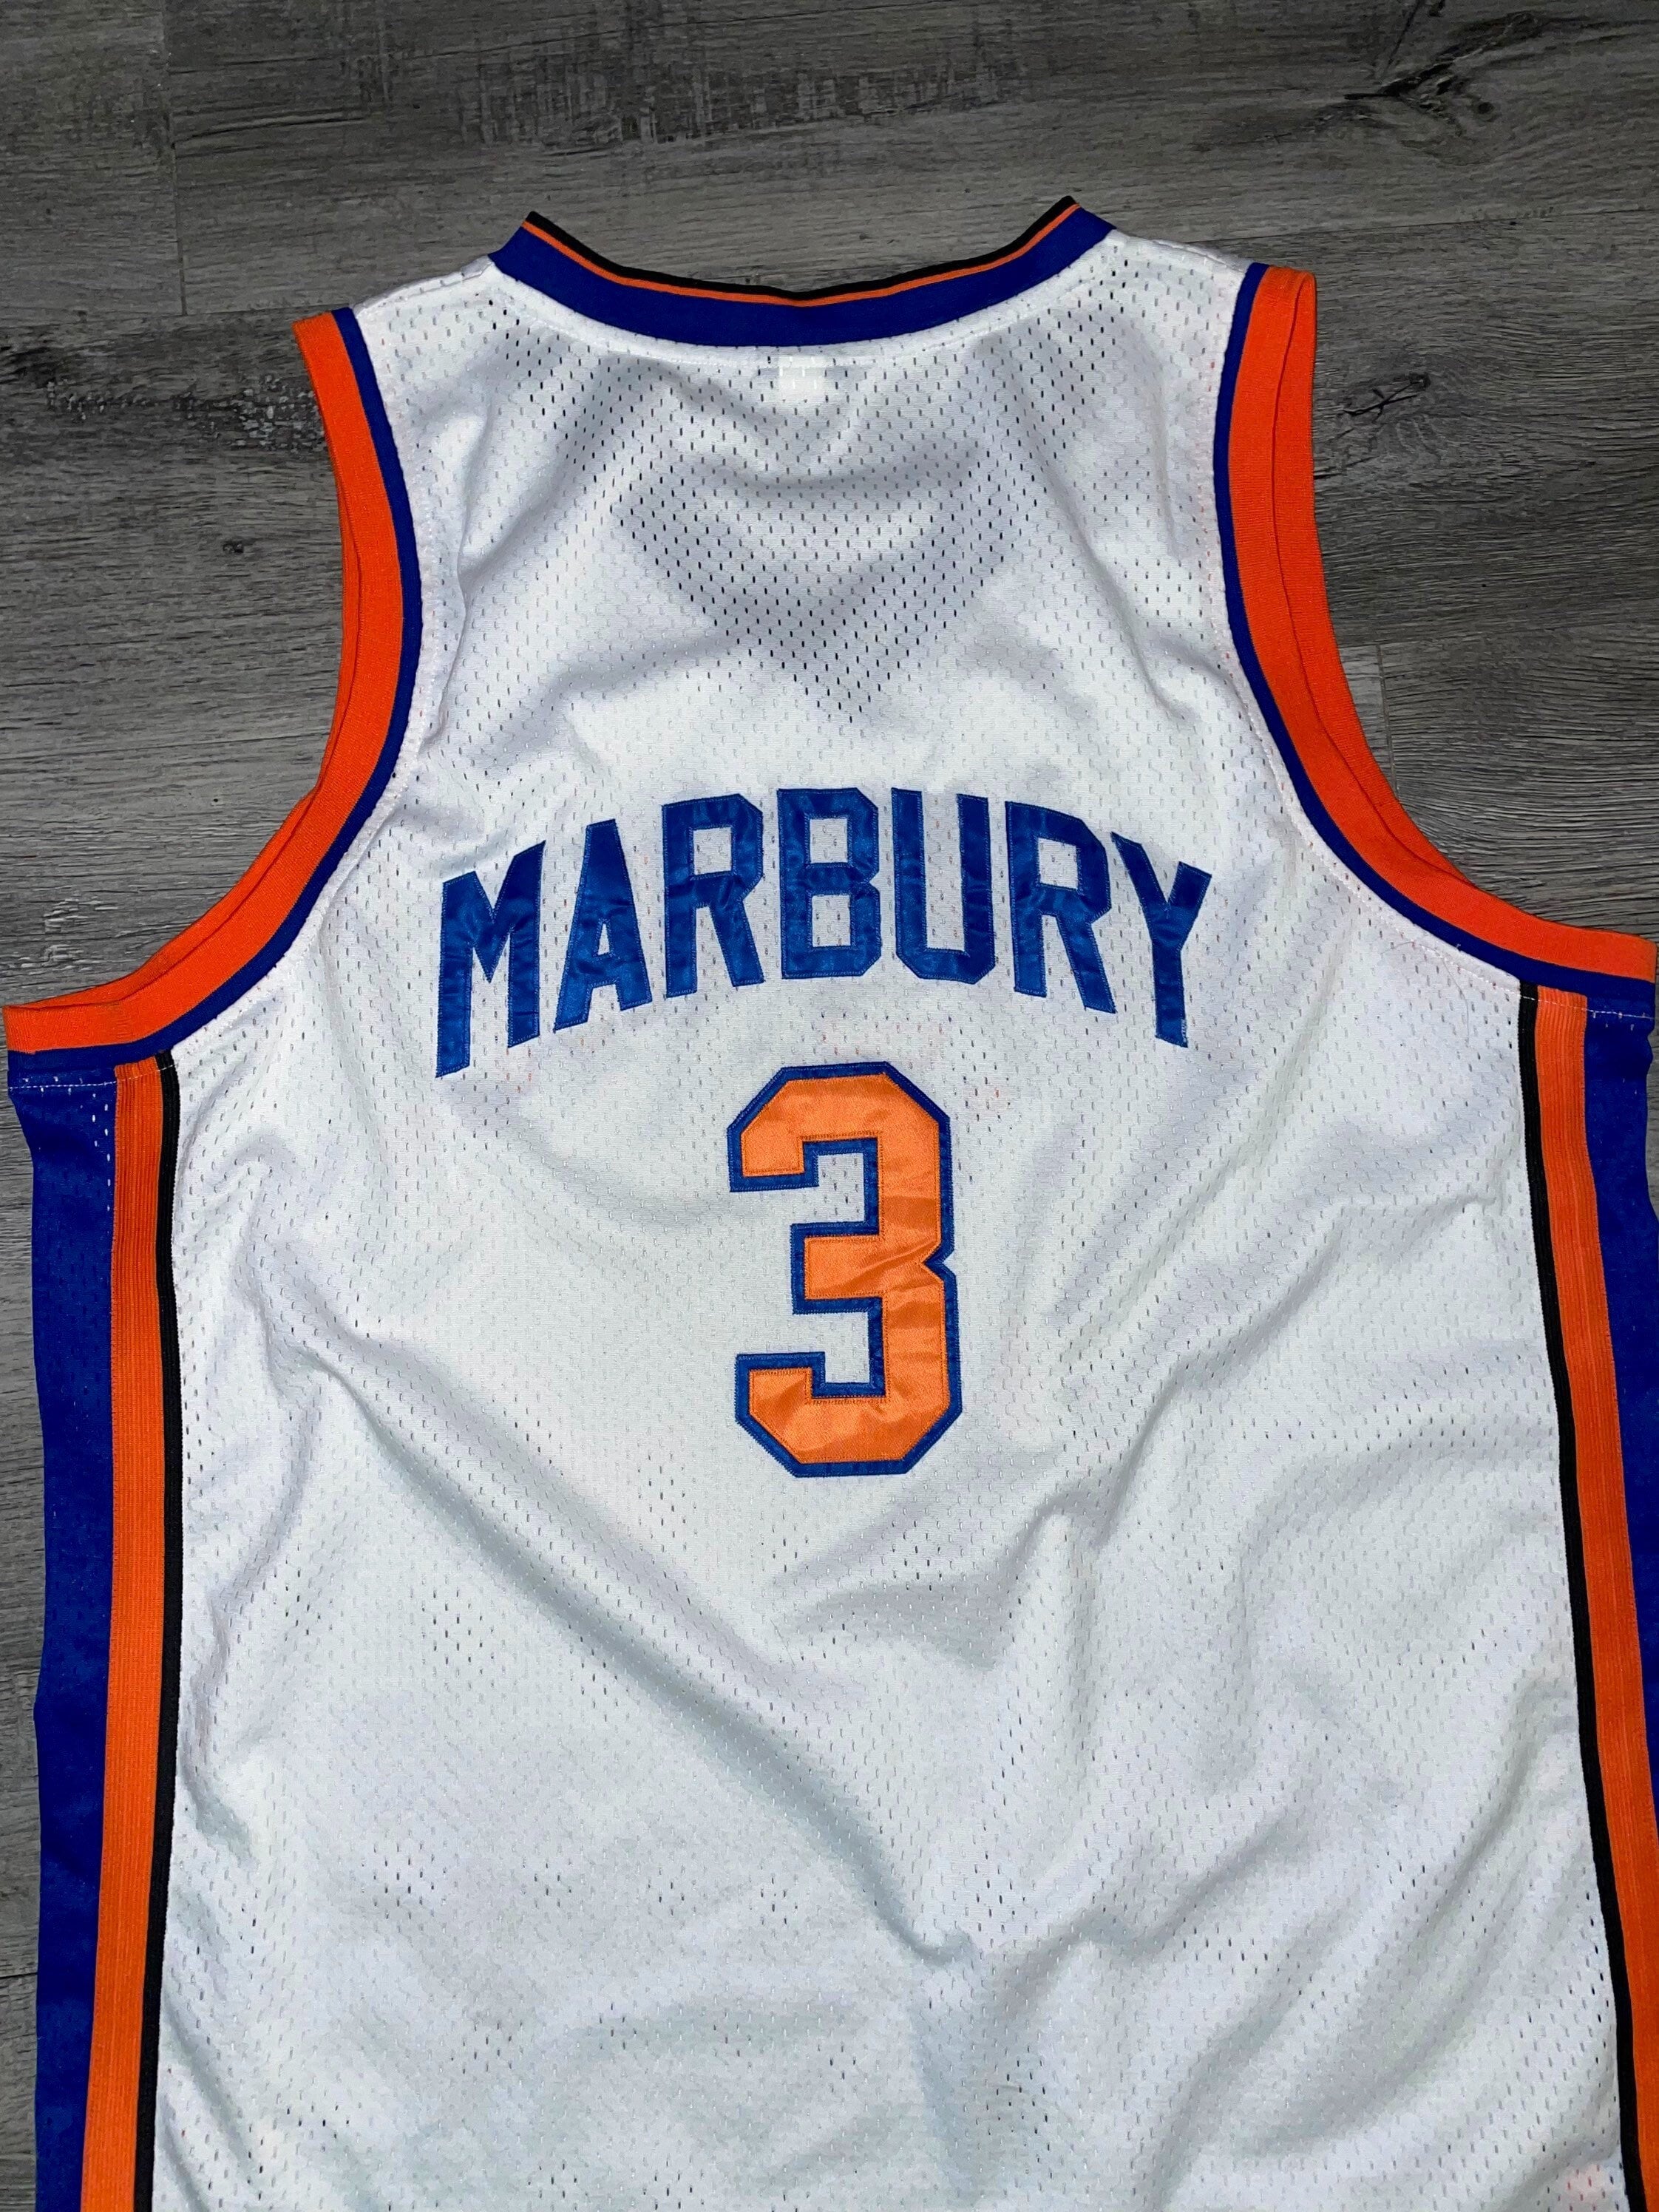 StrongIslandVTG Vintage Original NBA New York Knicks Stephon Marbury Sewn Basketball Jersey by Nike.